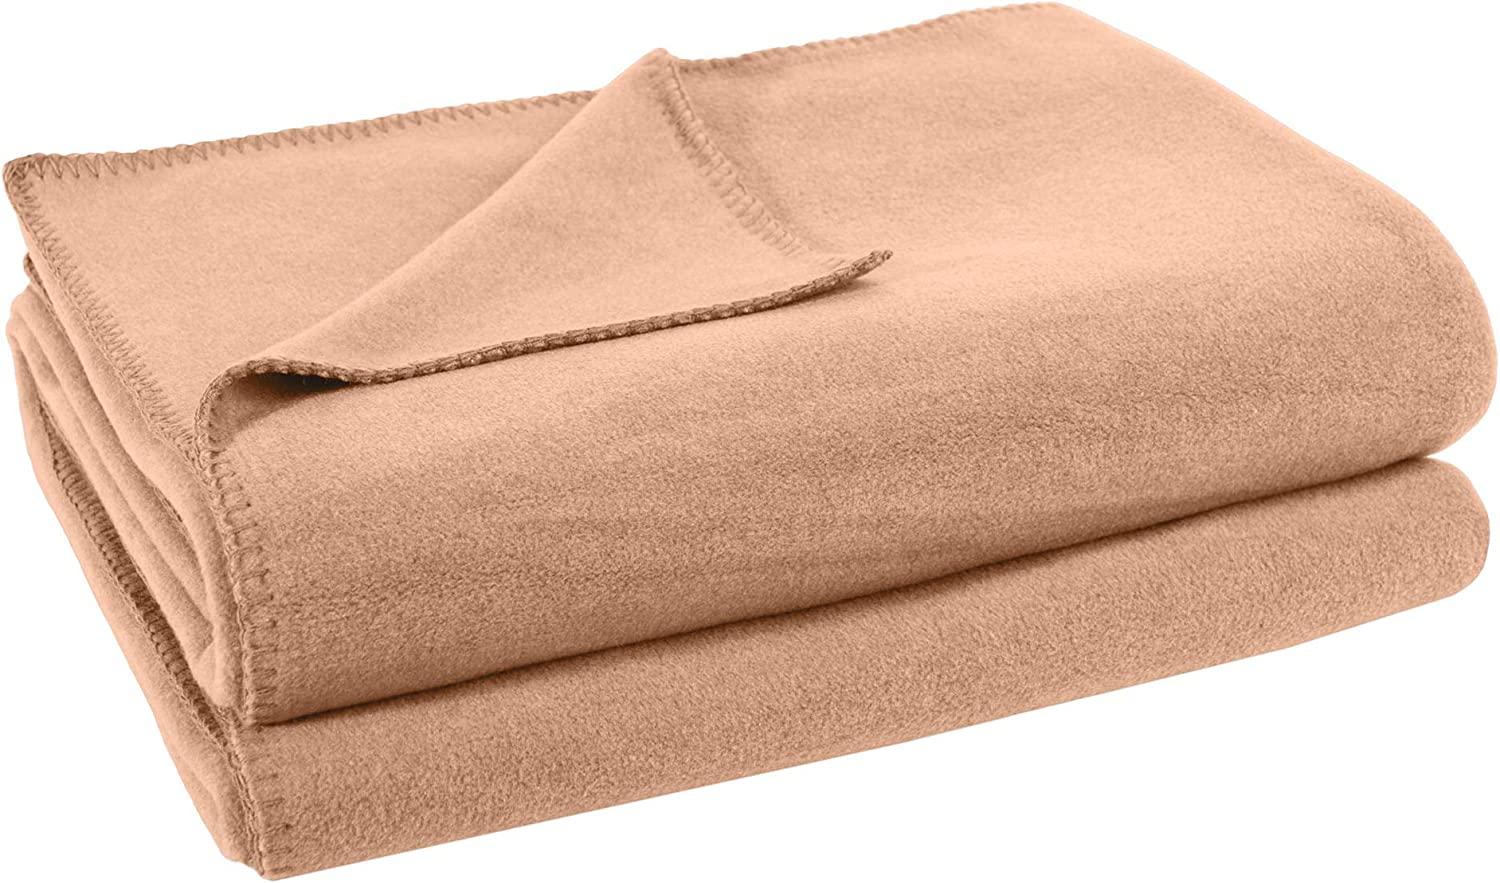 Zoeppritz Soft-Fleece Decke sand 160x200 cm 400578 Bild 1